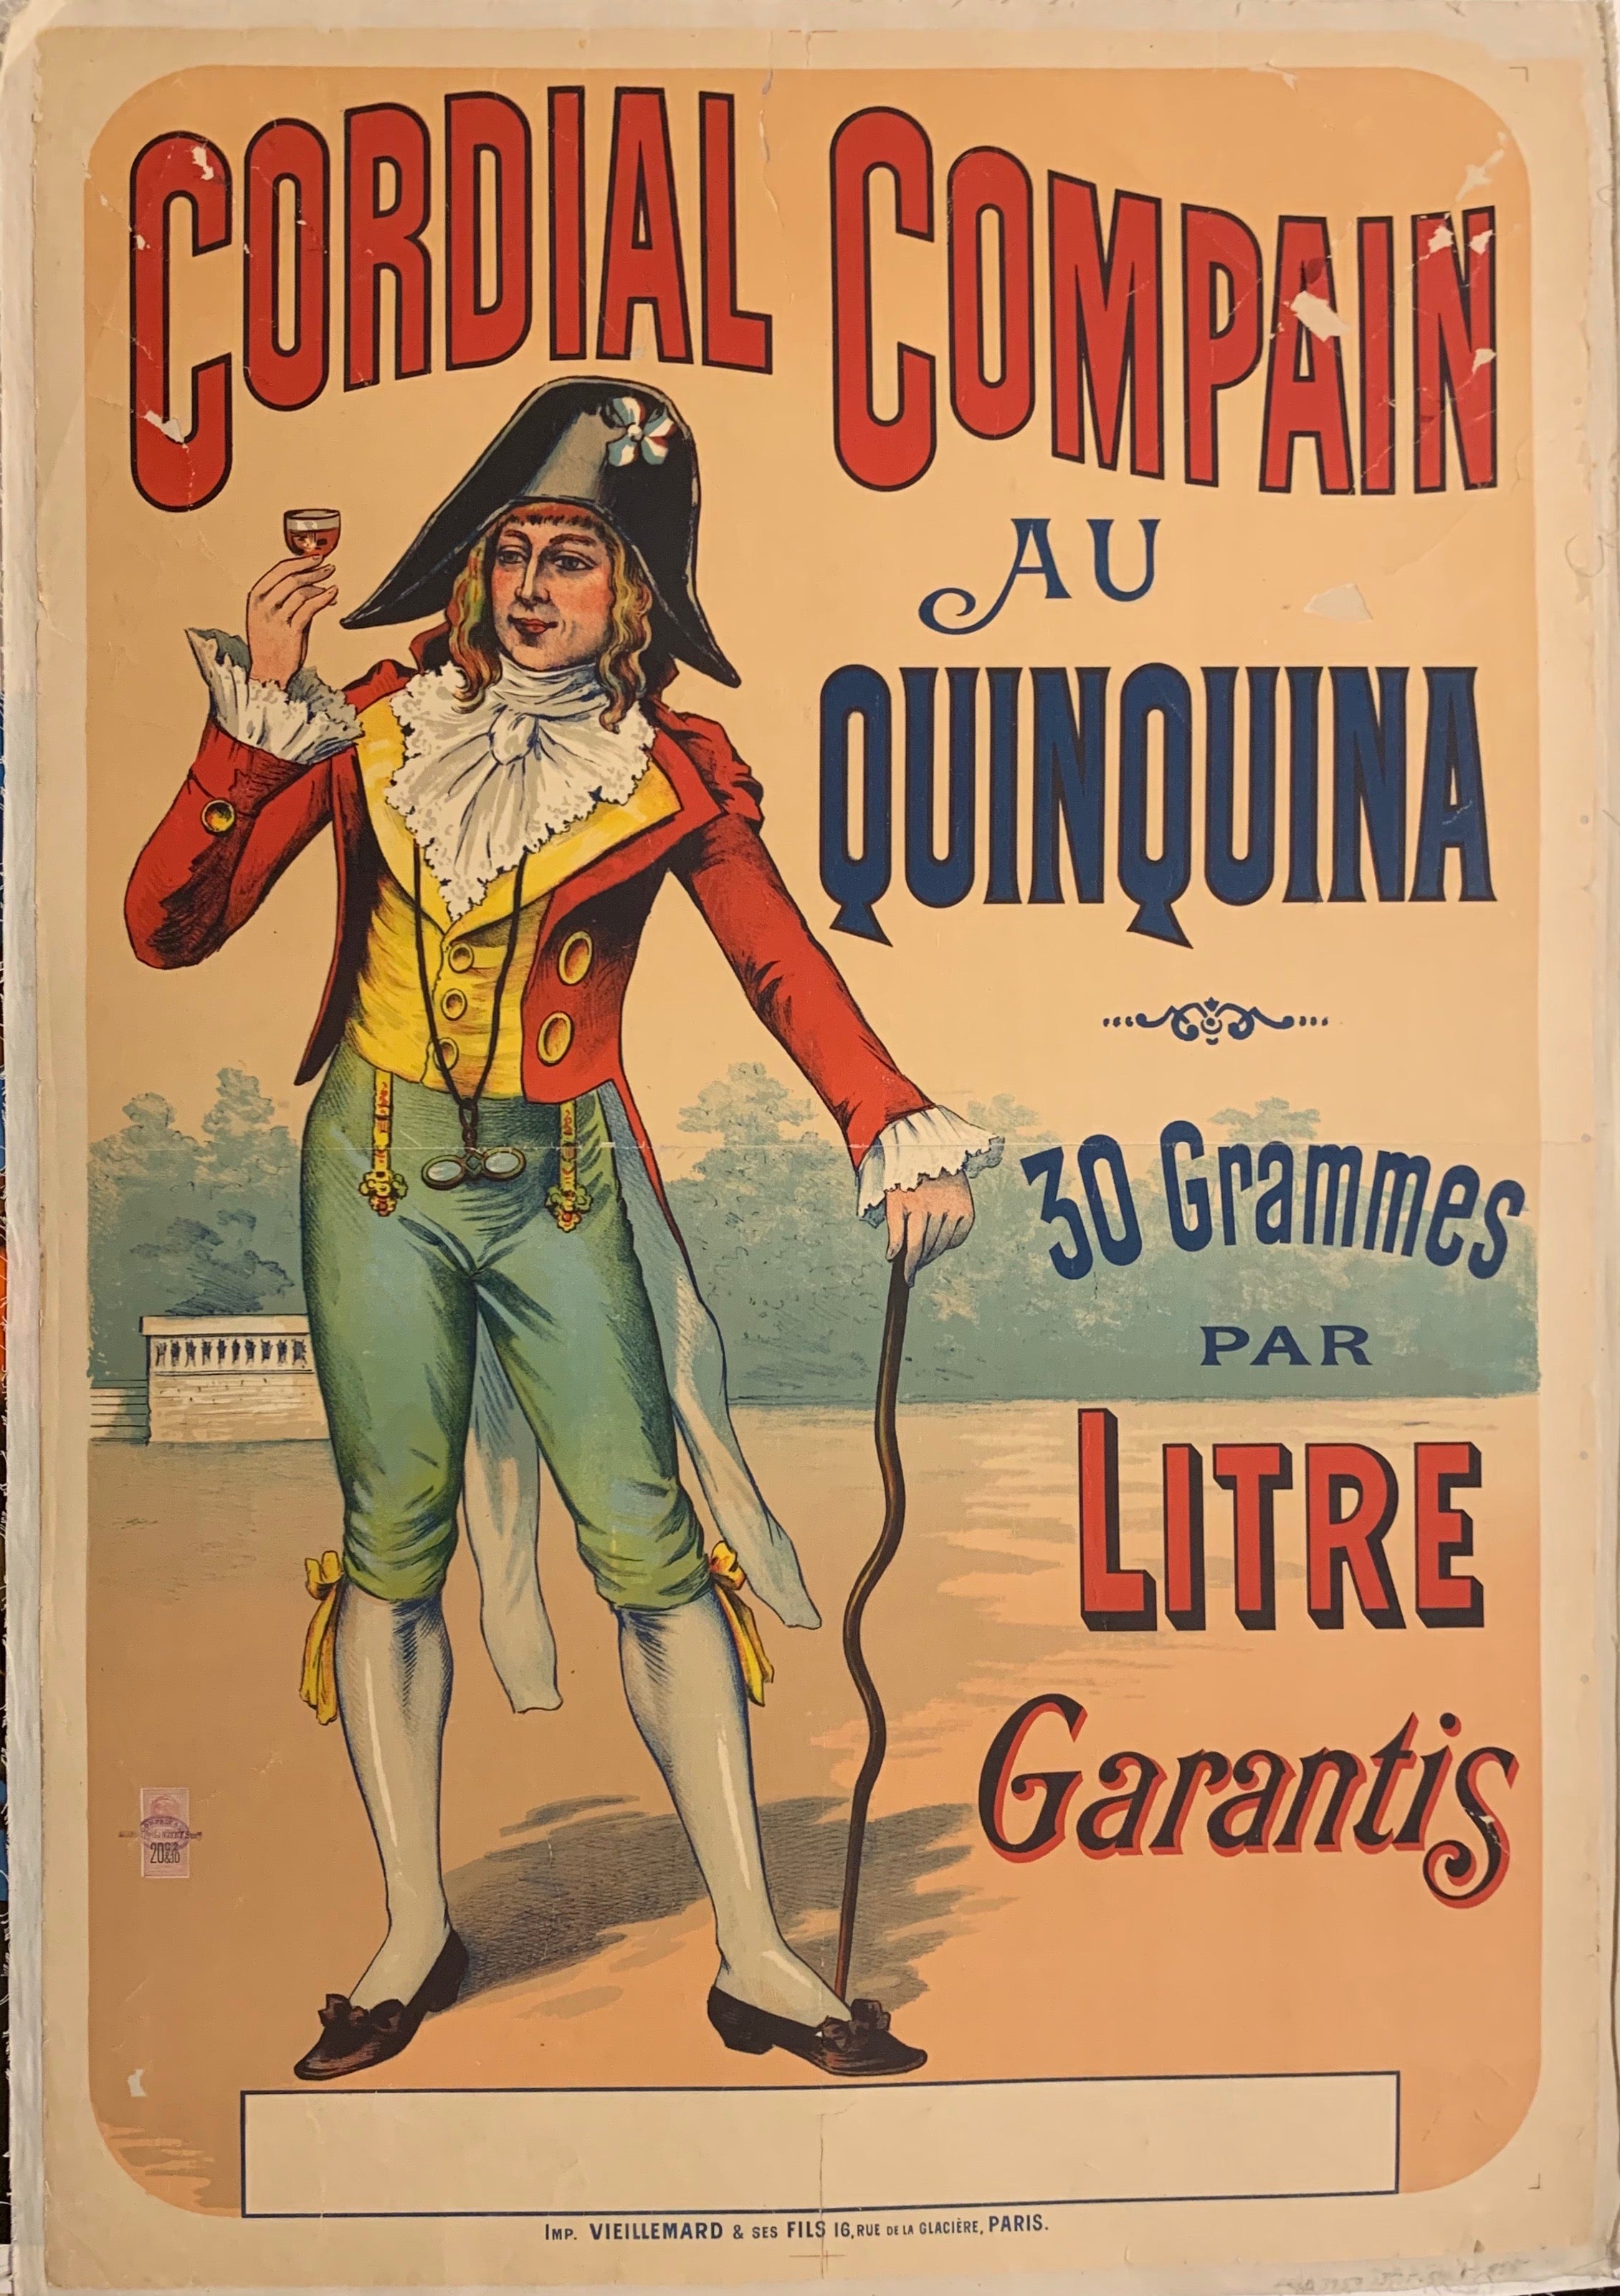 Cordial Compain au QuinQuina Poster